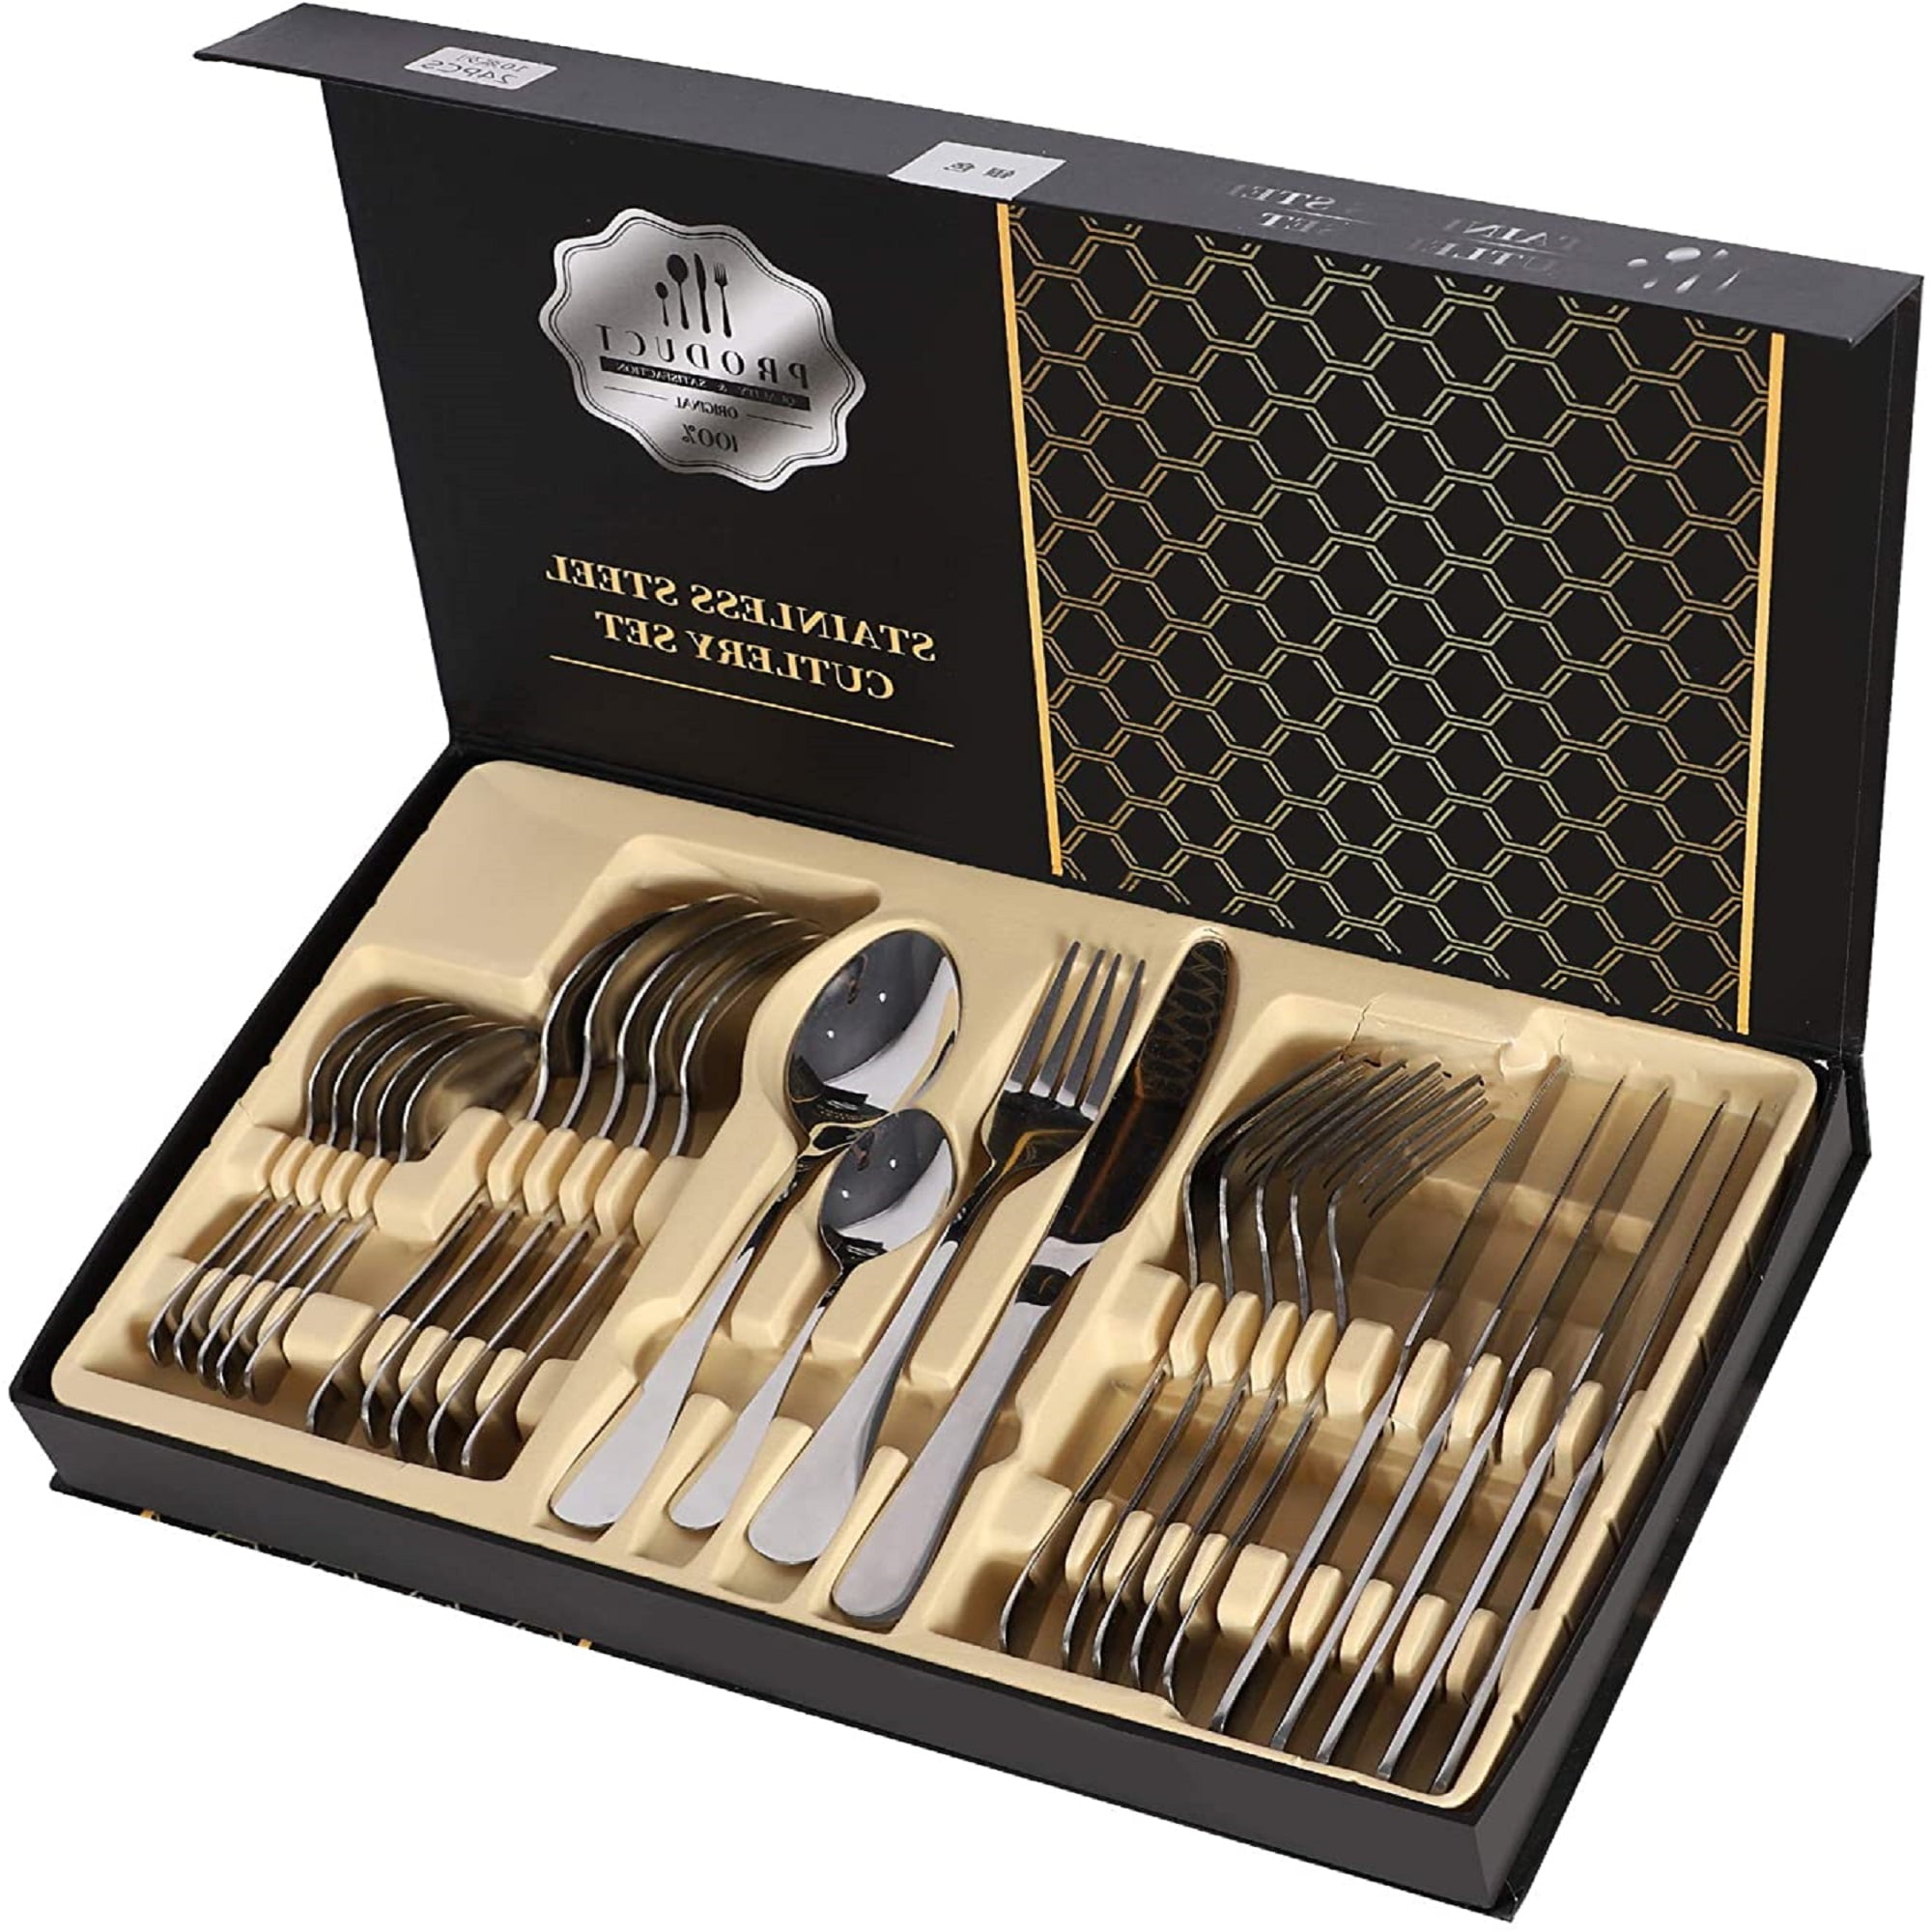 Cutlery Set Home Use 24-Piece Stainless Steel Flatware Silverware Set Knife/Fork/Spoon Mirror Polished Dinnerware Kitchen Tableware 